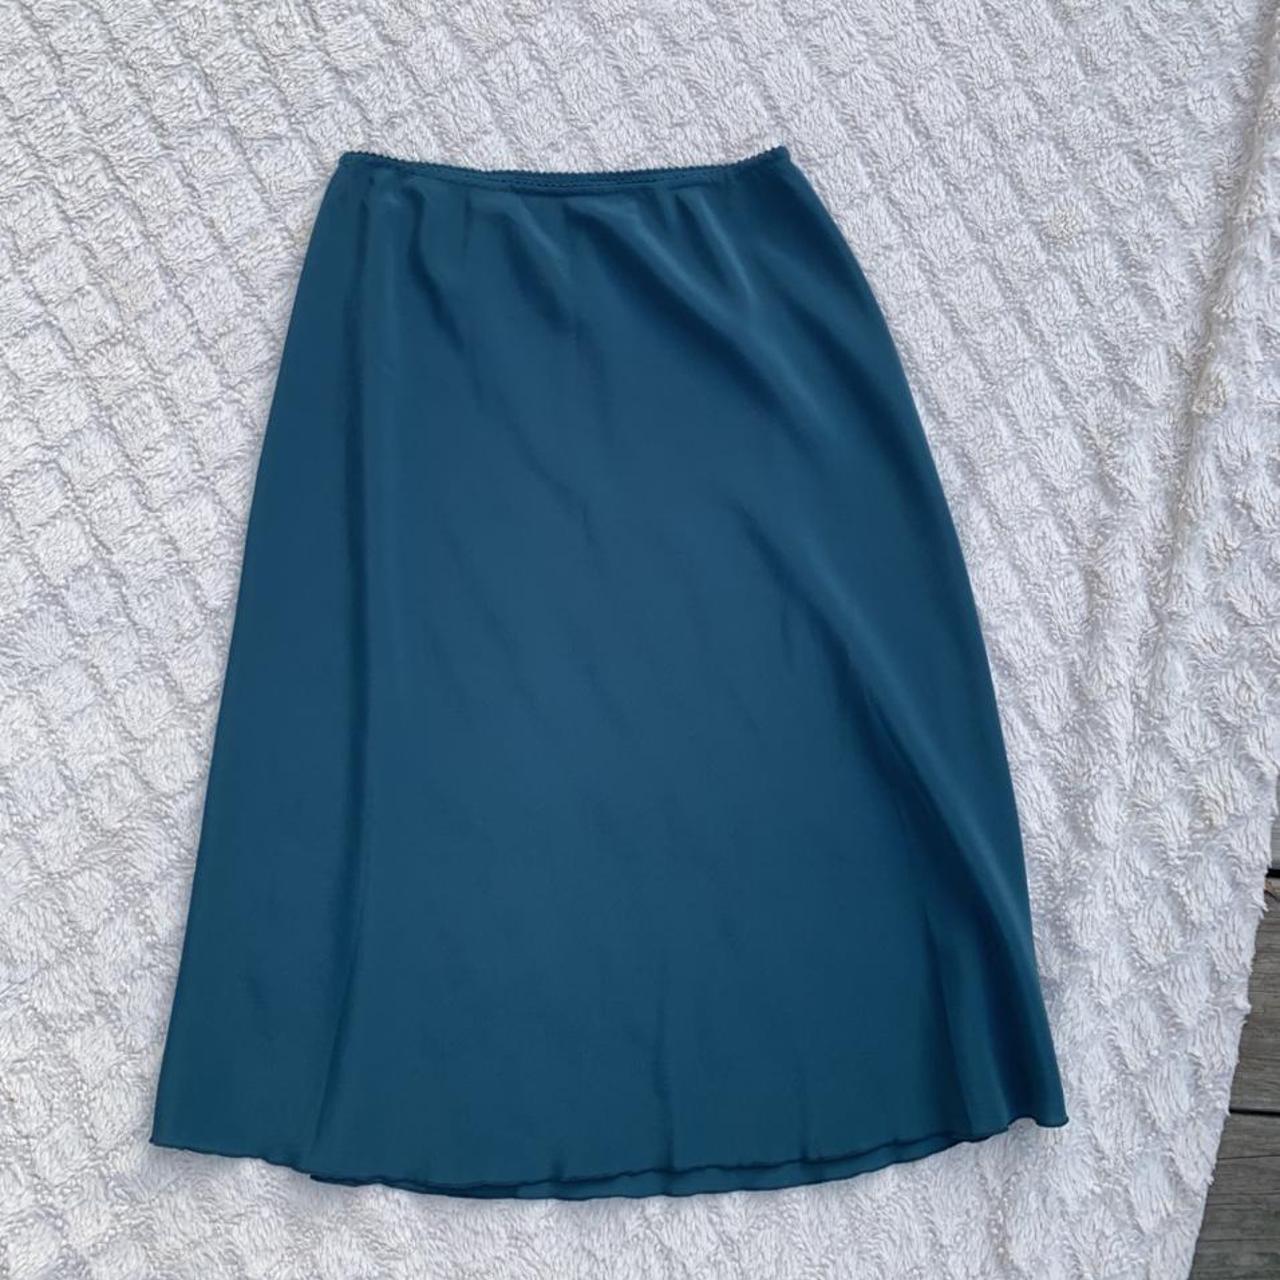 Beautiful 90’s vintage midi skirt in perfect... - Depop